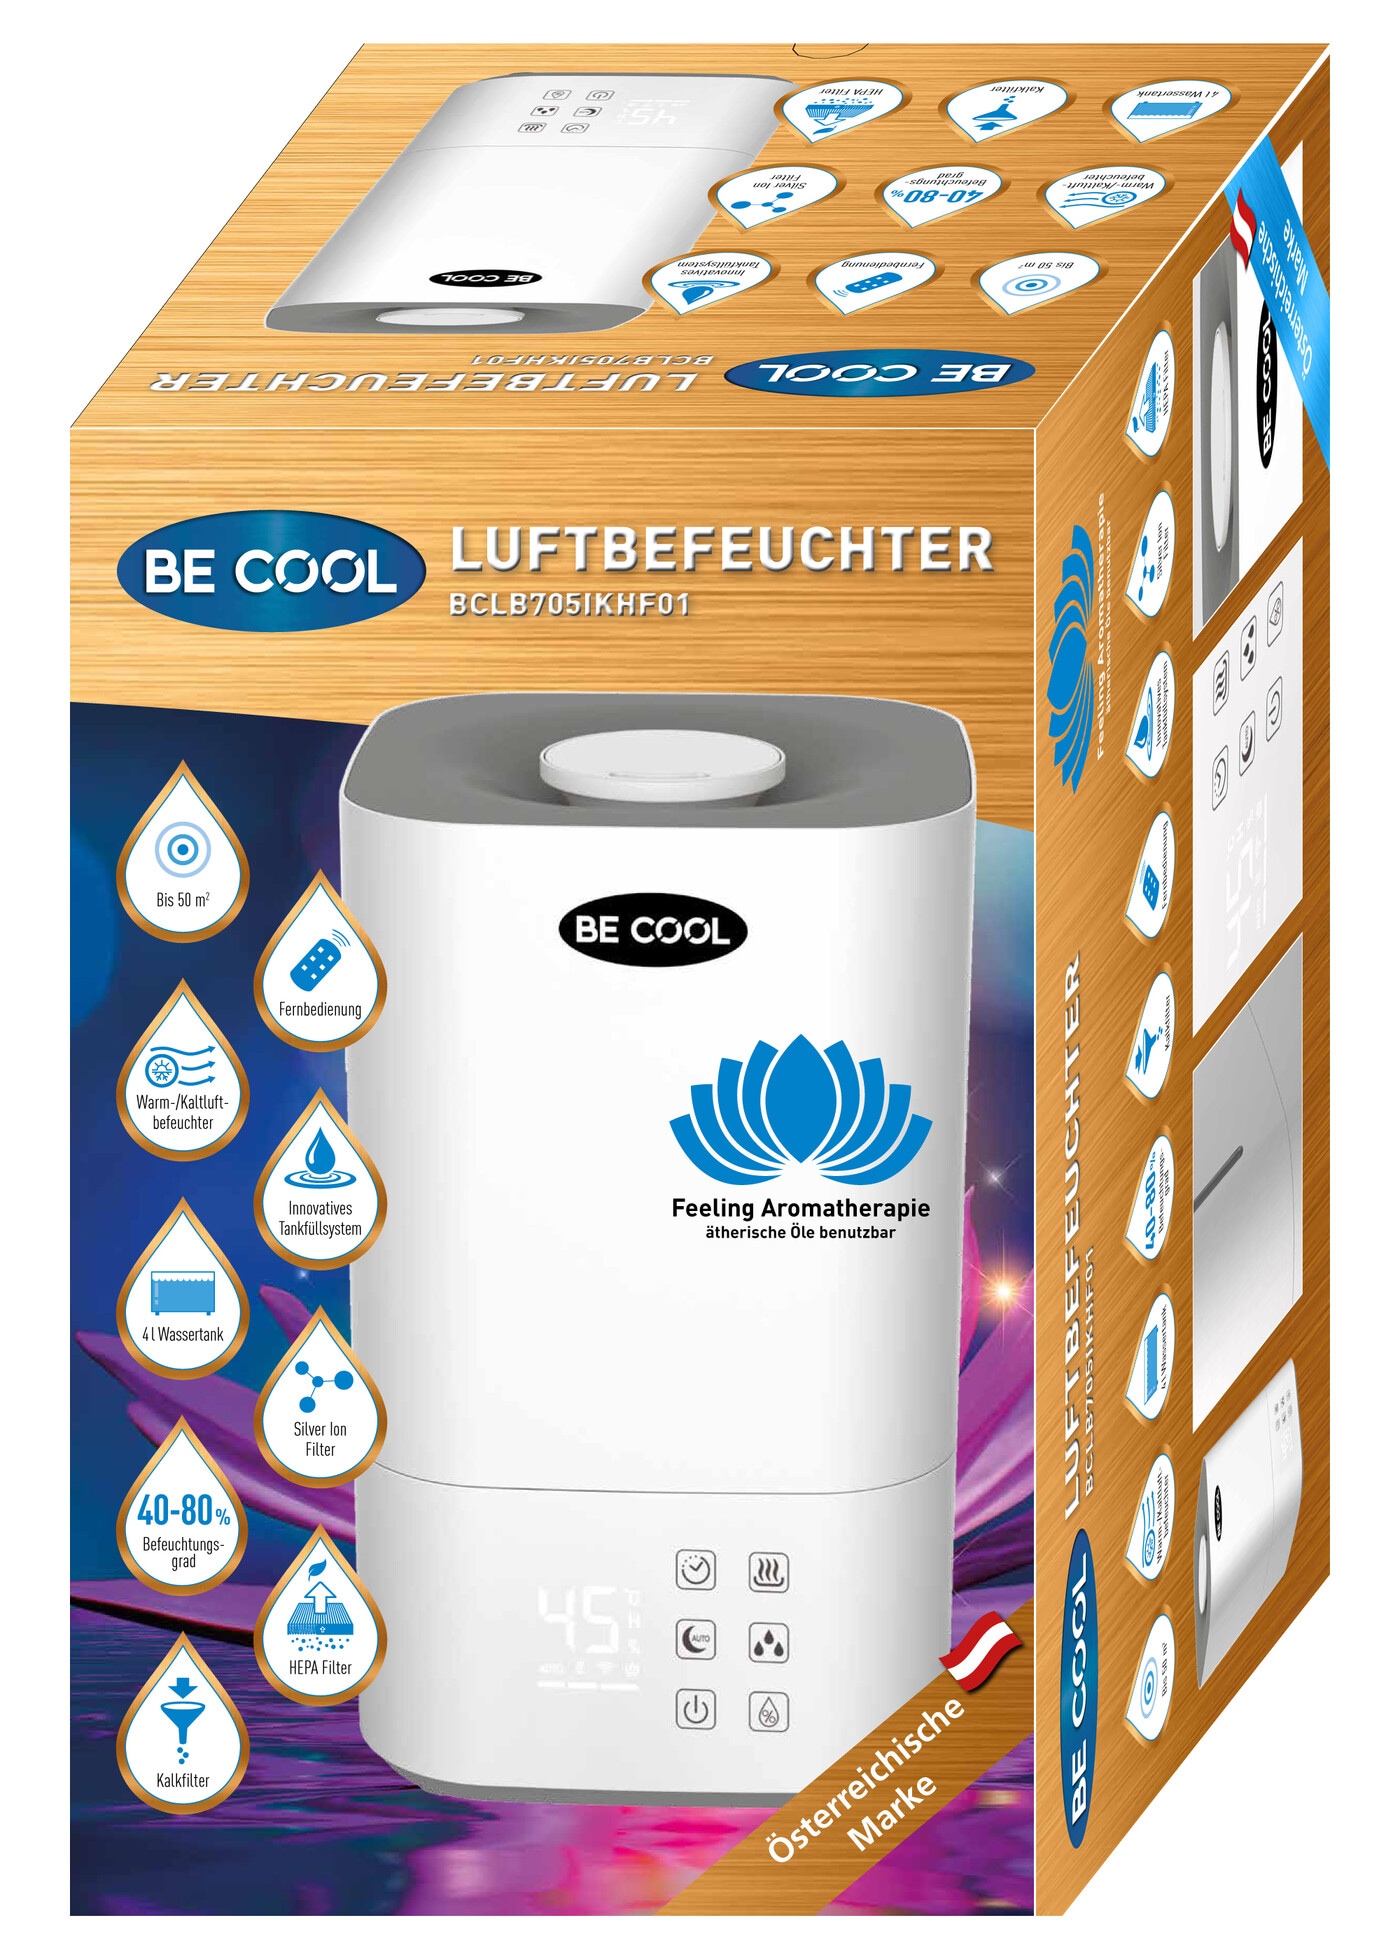 be cool Luftbefeuchter »BCLB705IKHF01«, 4 l Wassertank